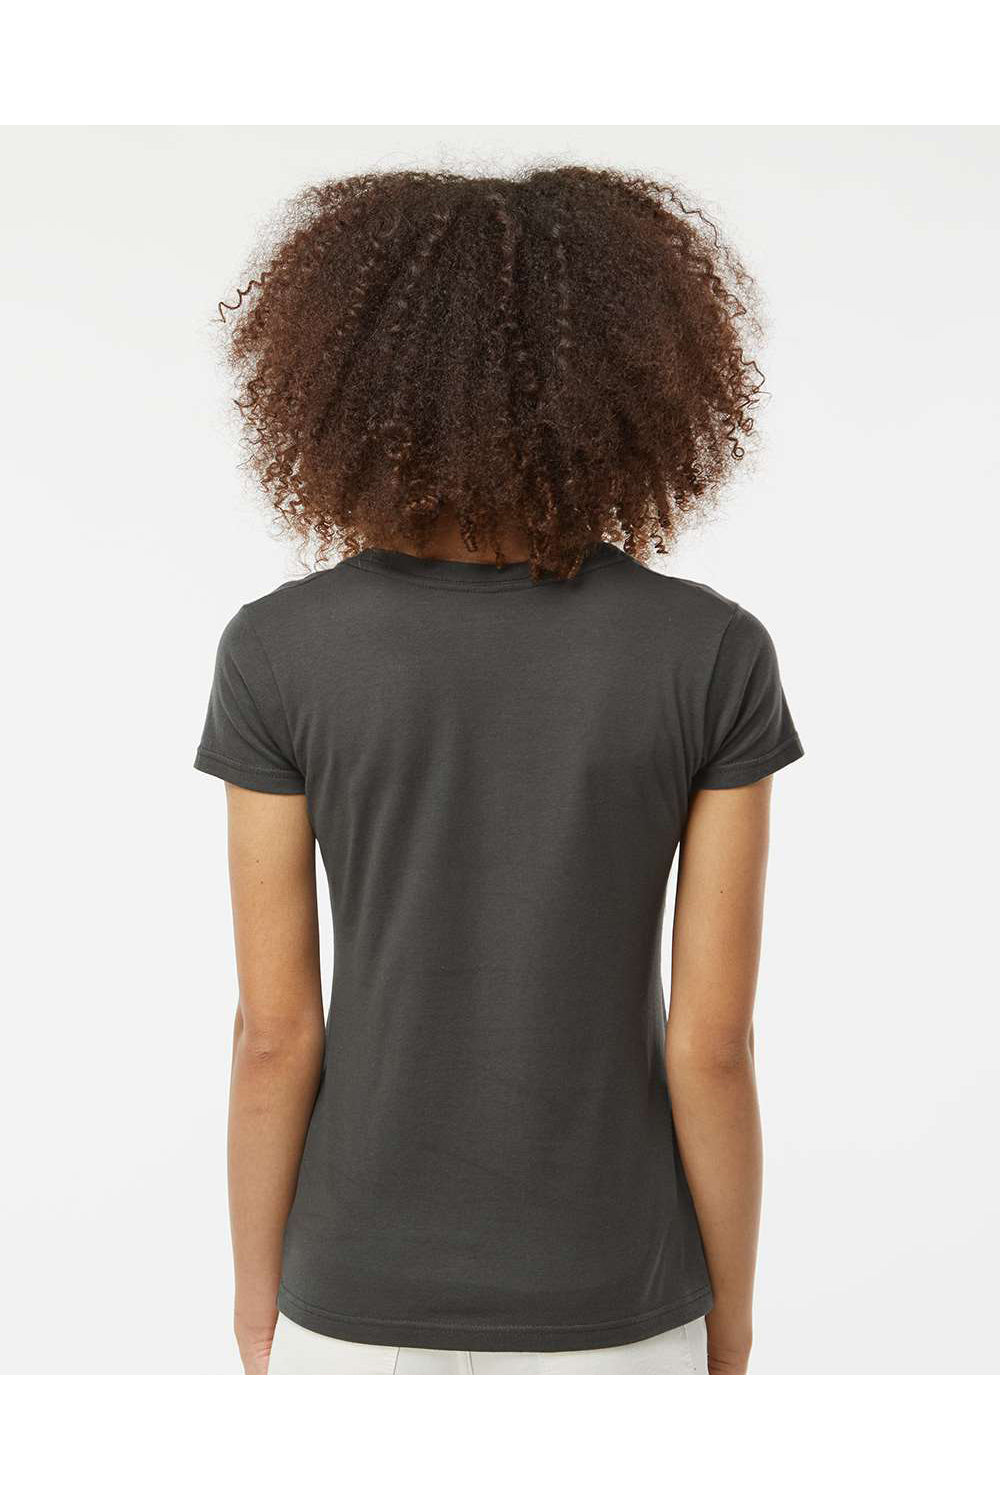 Tultex 214 Womens Fine Jersey Short Sleeve V-Neck T-Shirt Charcoal Grey Model Back